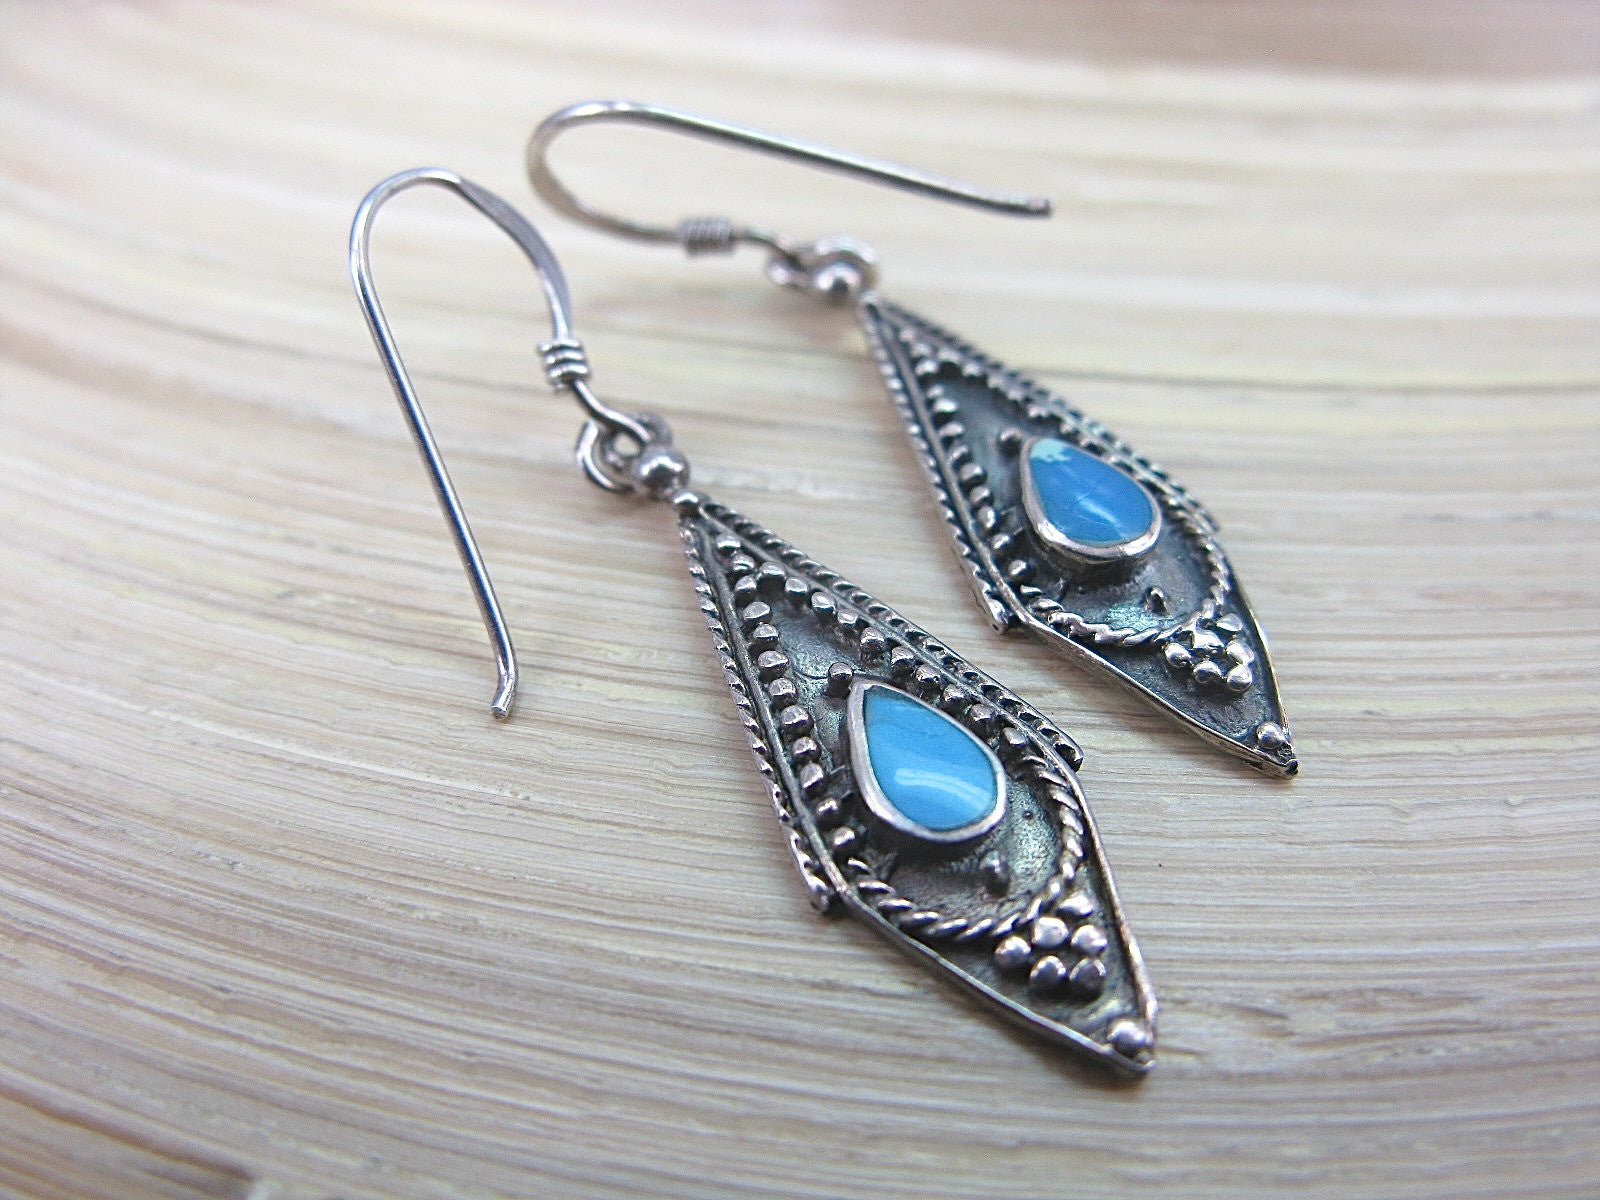 Turquoise Tribal Oxidized Dangle 925 Sterling Silver Earrings Earrings Faith Owl - Faith Owl